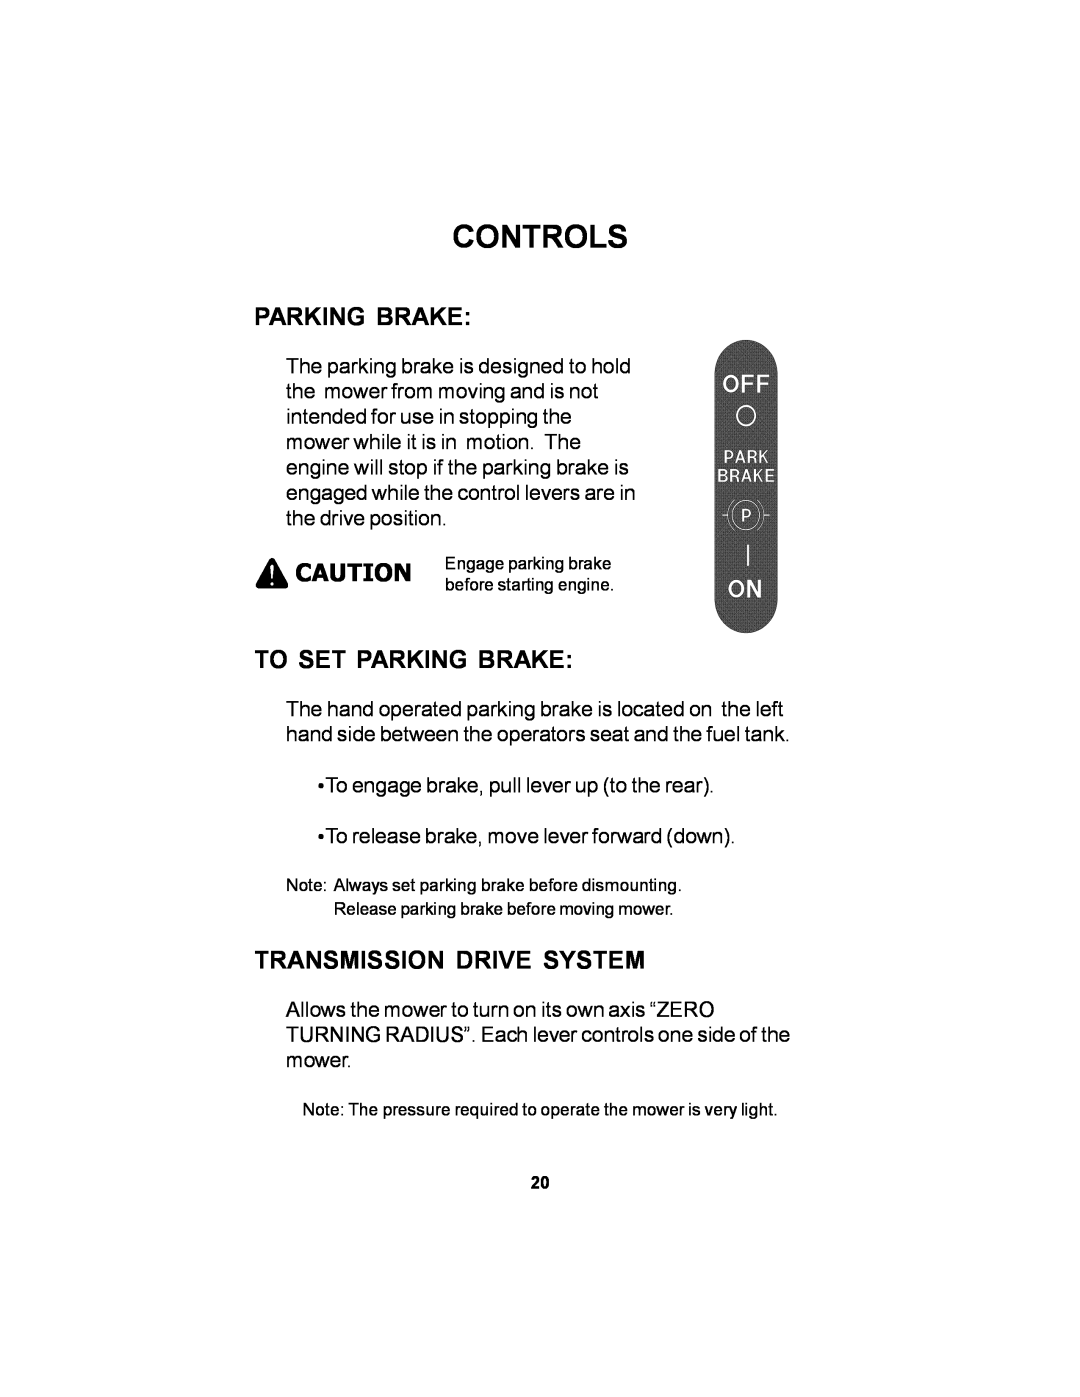 Dixon 36 manual To Set Parking Brake, Transmission Drive System, Controls 